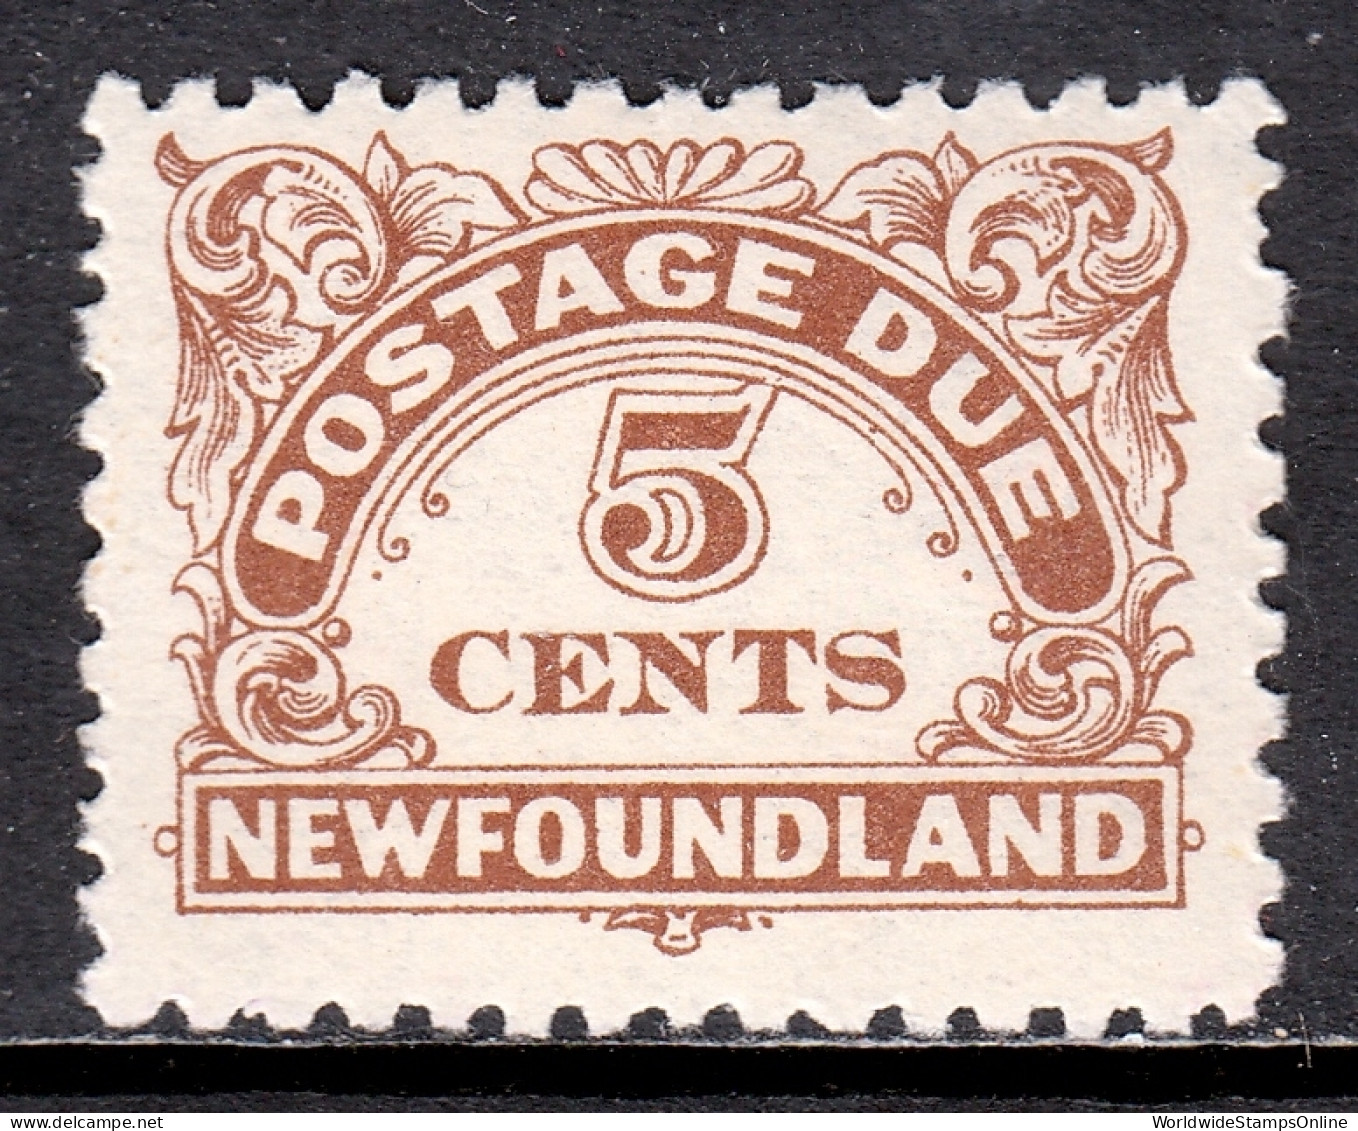 Newfoundland - Scott #J5 - MLH - Very Minor Gum Bump - SCV $15 - Back Of Book